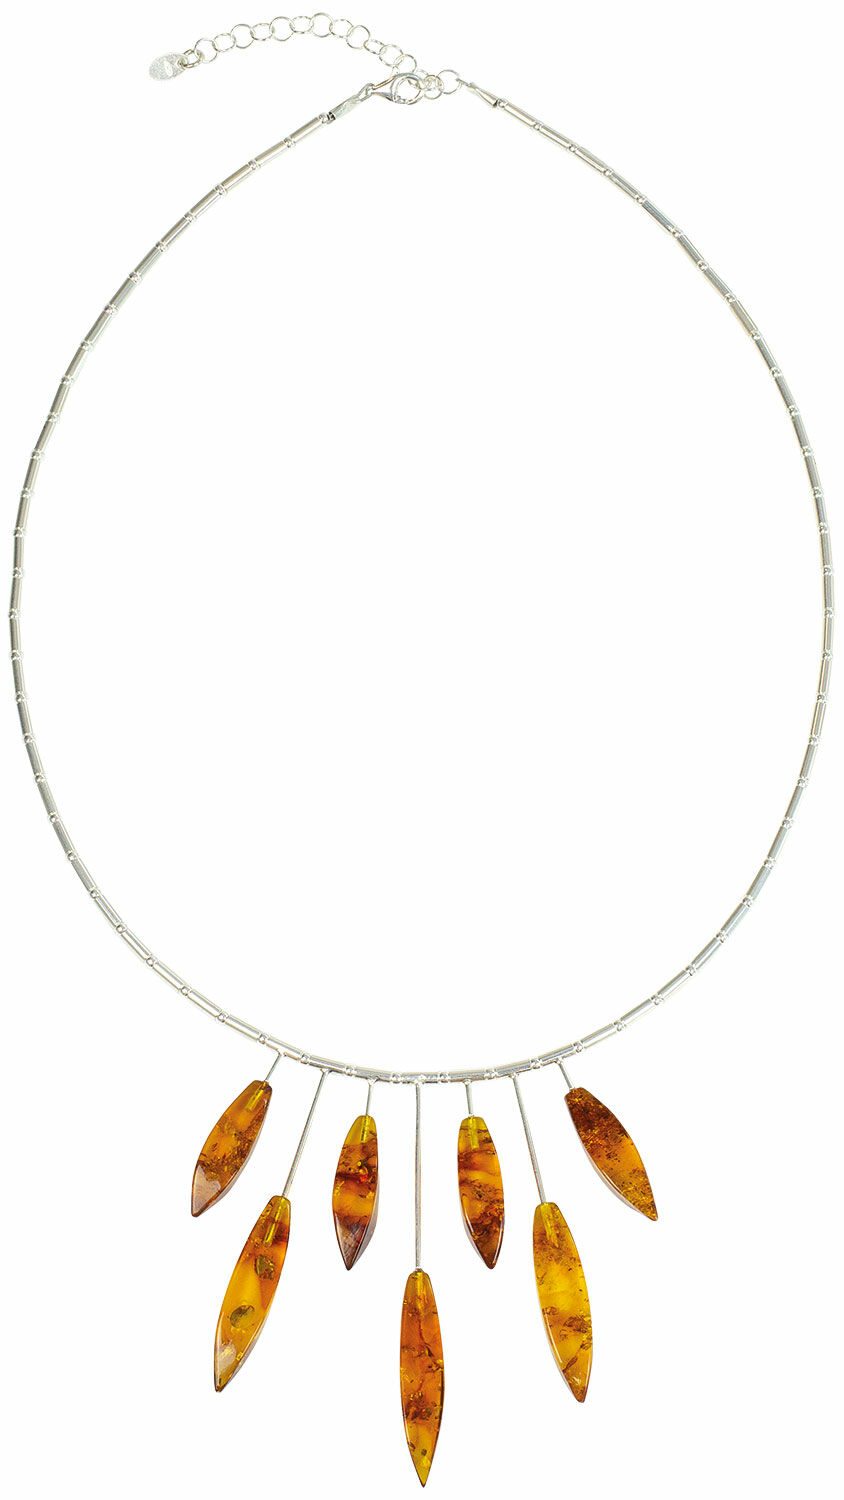 Amber necklace "Arminda"